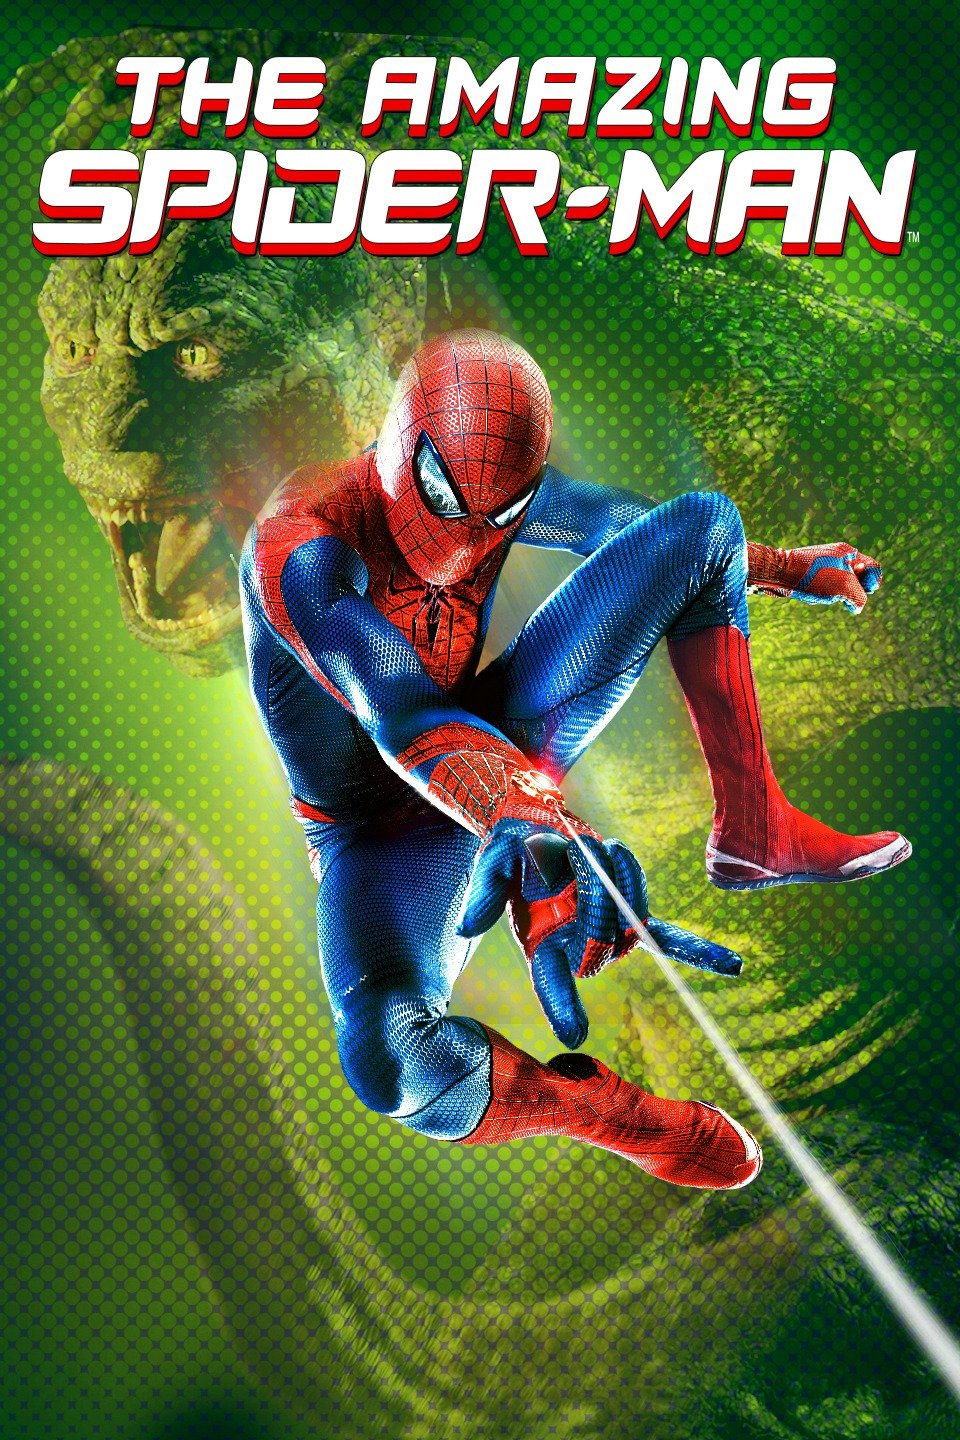 [MINI Super-HQ] The Amazing Spider-Man (2012) ดิ อะเมซิ่ง สไปเดอร์แมน [1080p] [พากย์ไทย 5.1 + อังกฤษ DTS] [BluRay.DTS.x264] [บรรยายไทย + อังกฤษ] [เสียงไทย + ซับไทย]